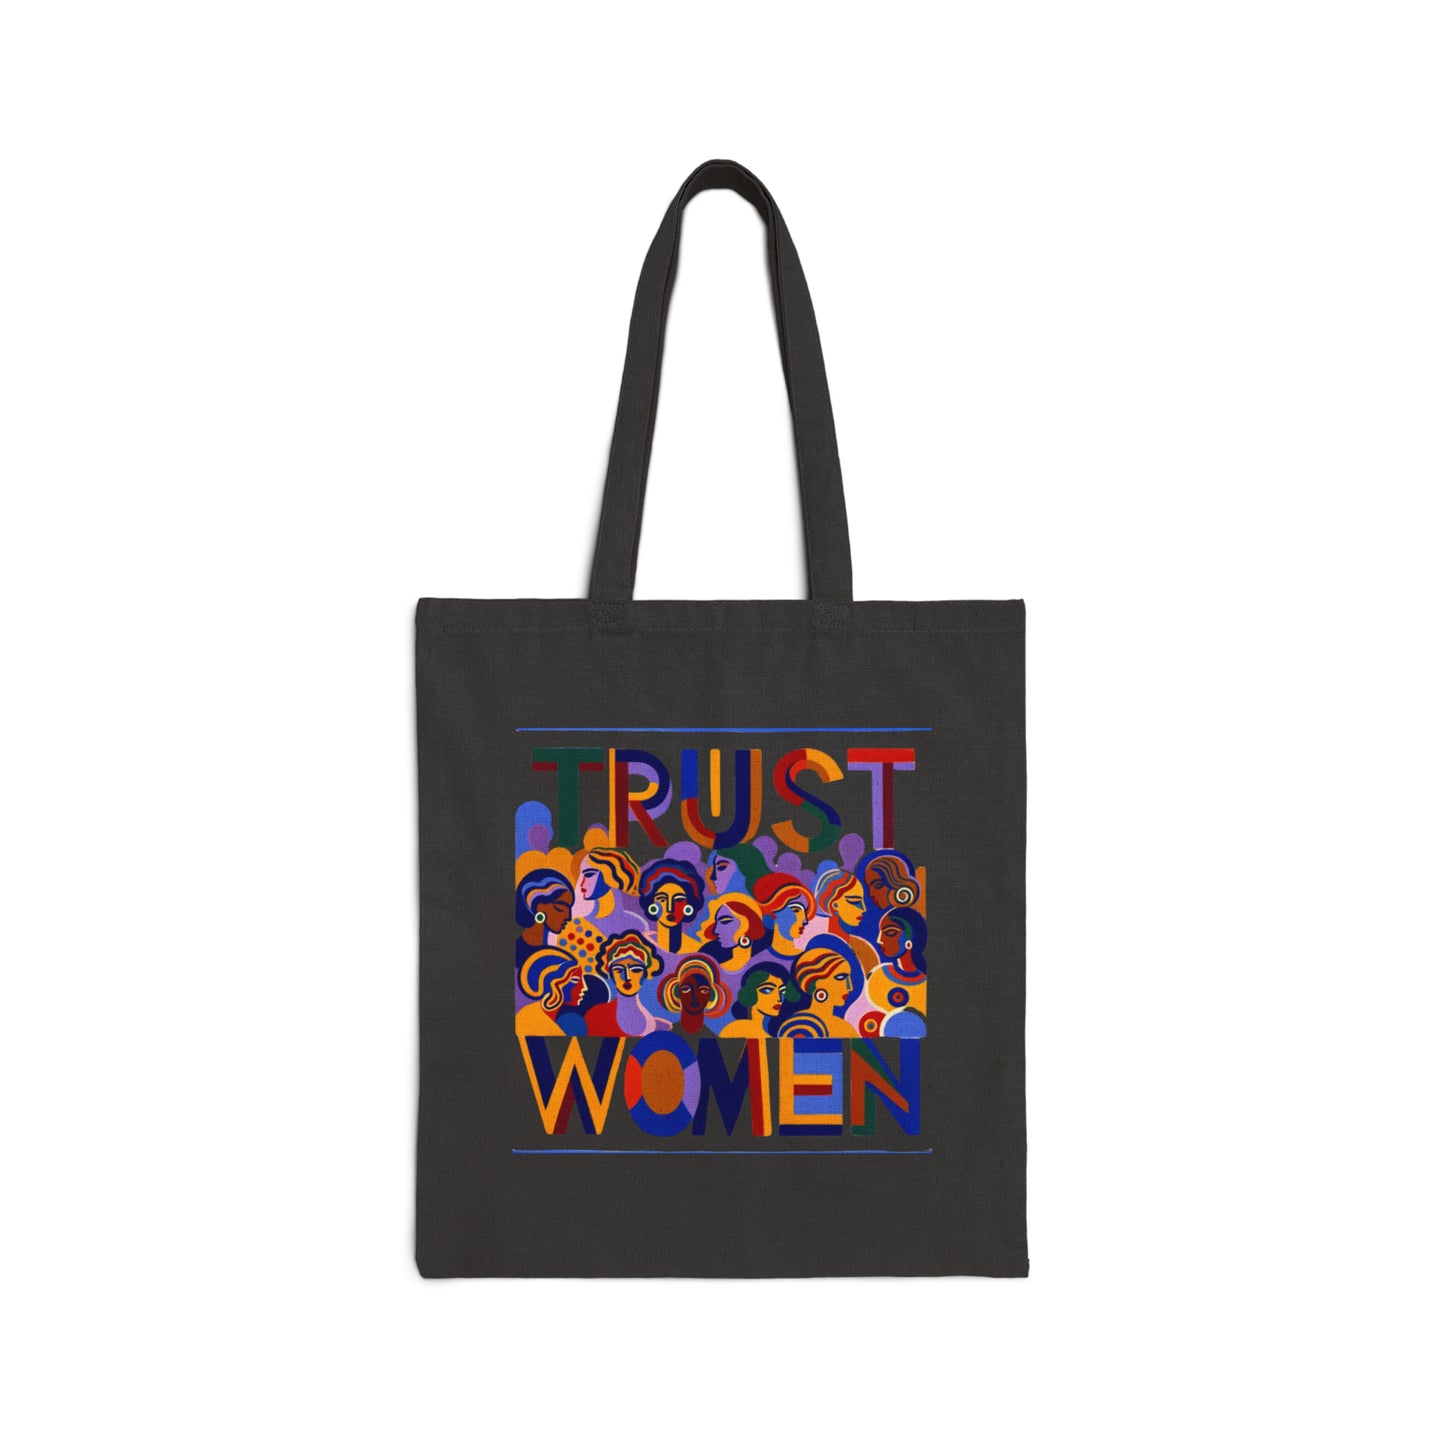 Bold Statement Canvas Tote Bag: Trust Women!